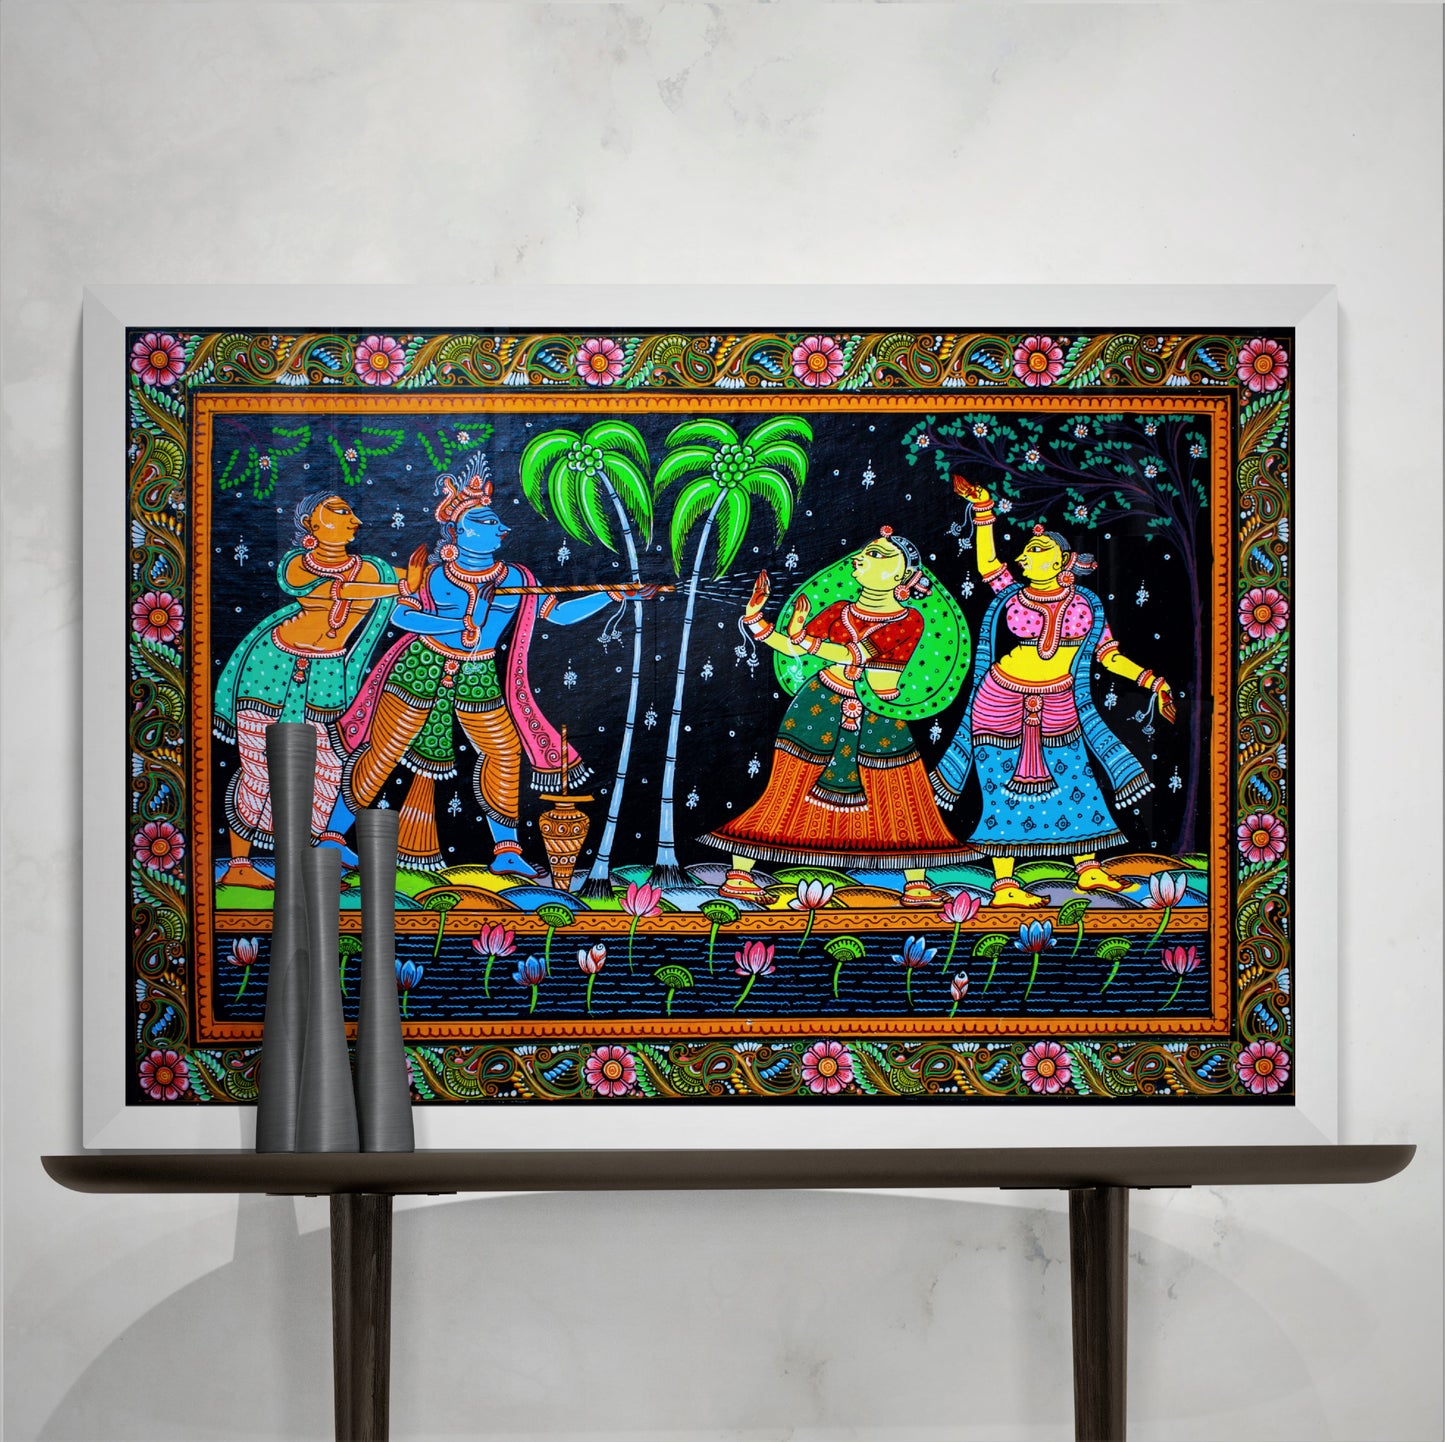 The Krishna Playing Holi with Gopiya Pattachitra Painting Framed Wall Art